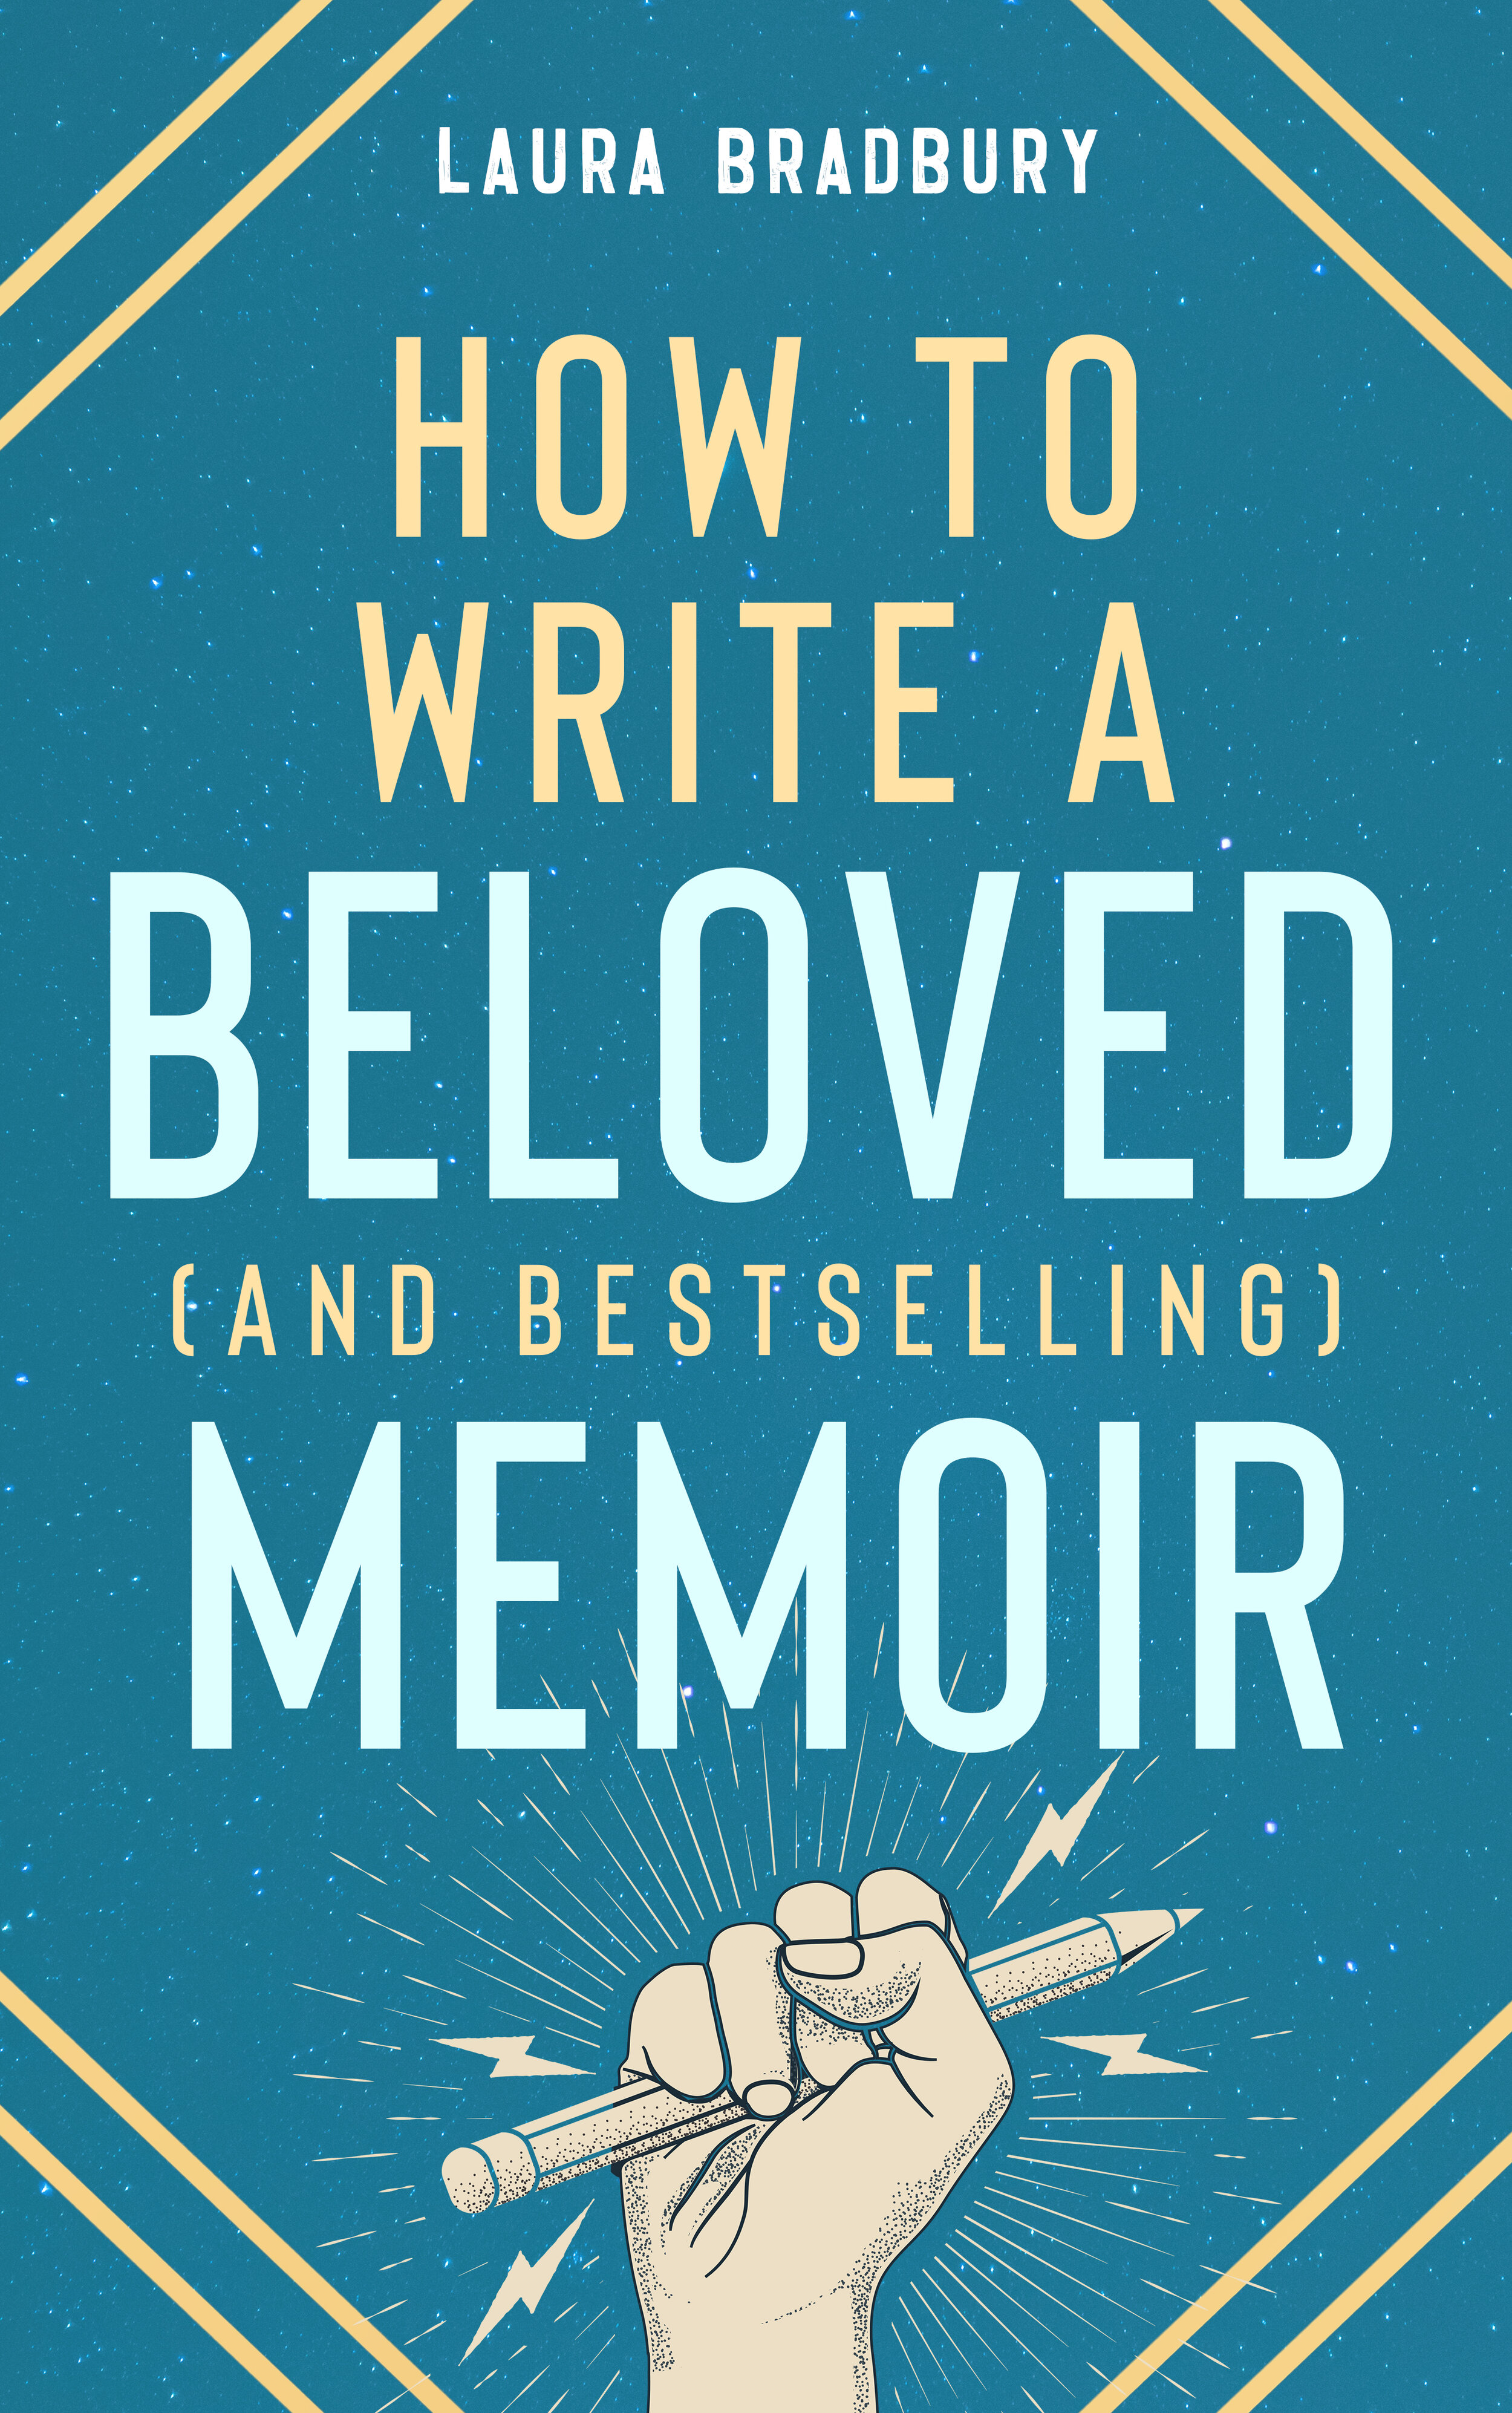  How To Write a Beloved (and Bestselling) Memoir